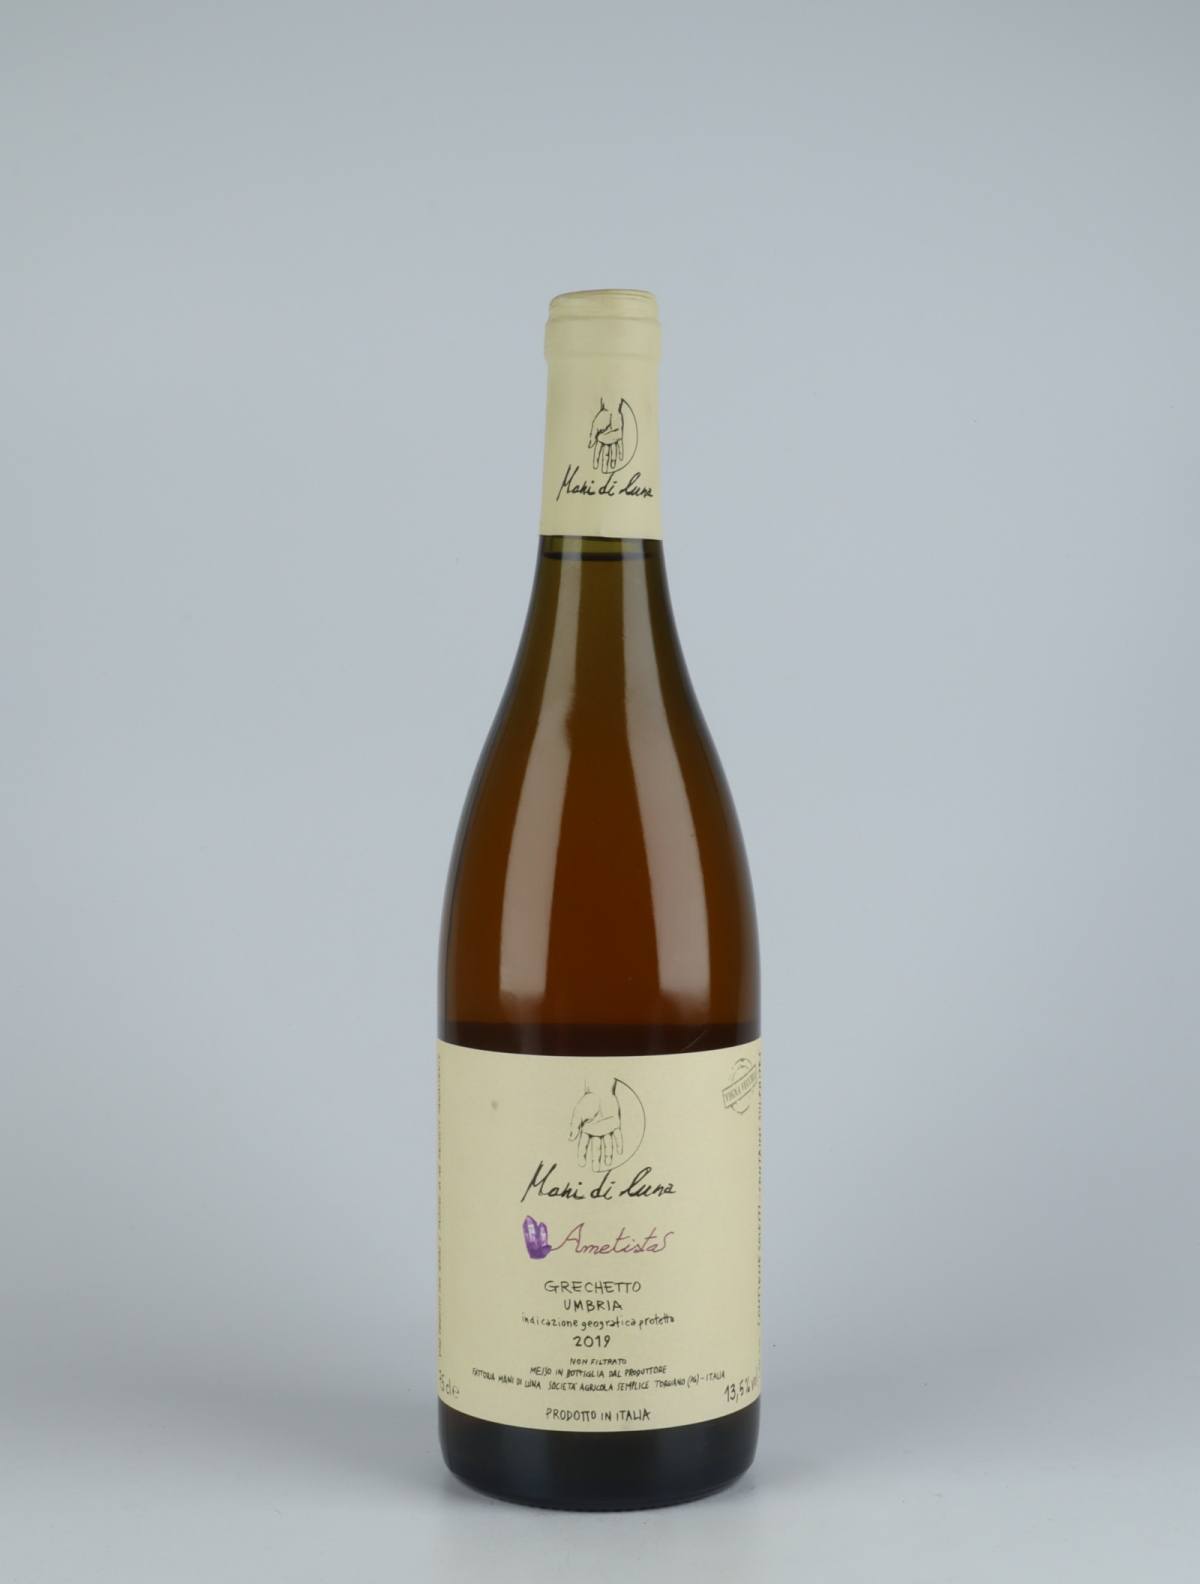 A bottle 2019 Ametistas Orange wine from Mani di Luna, Umbria in Italy